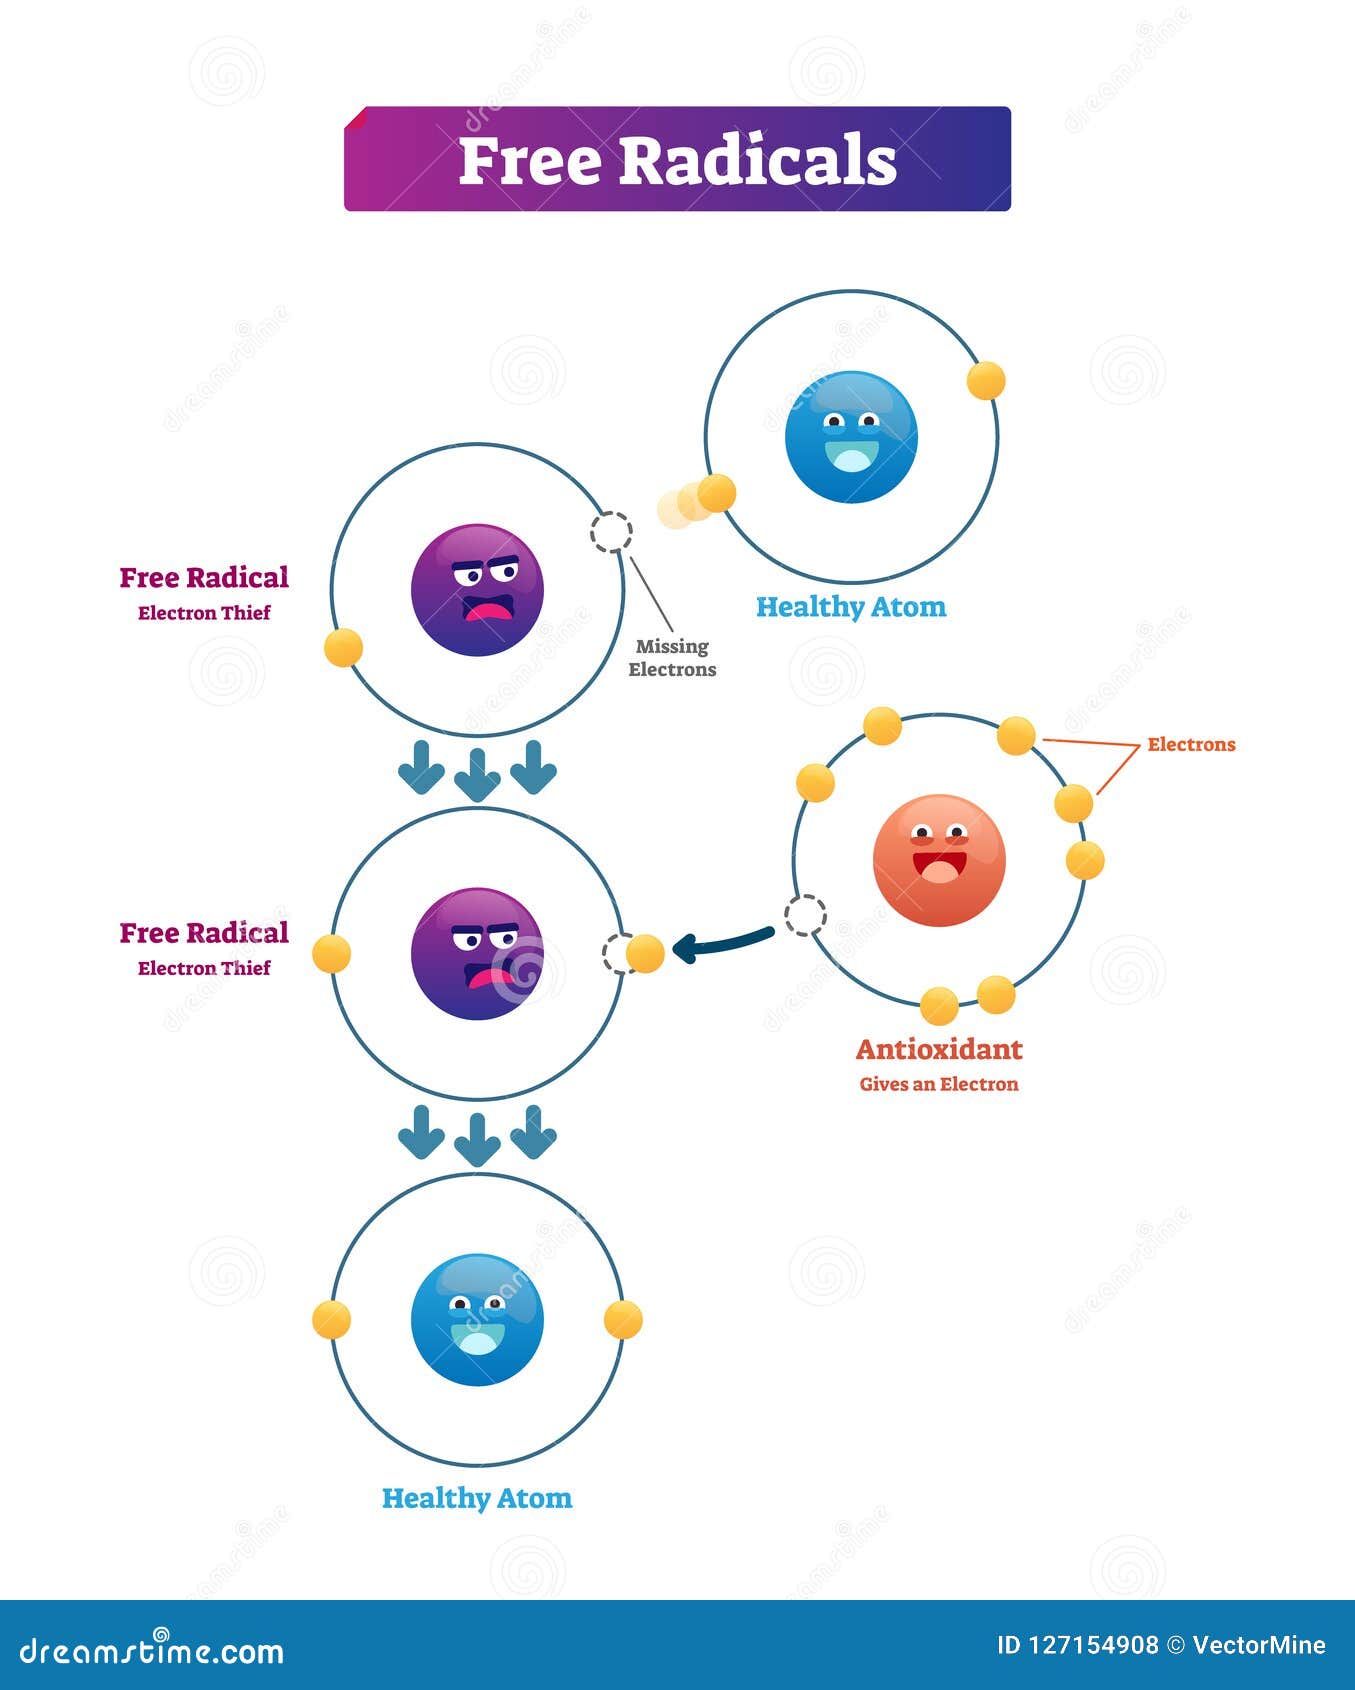 free radicals, antioxidant and healthy atom explanation   diagram